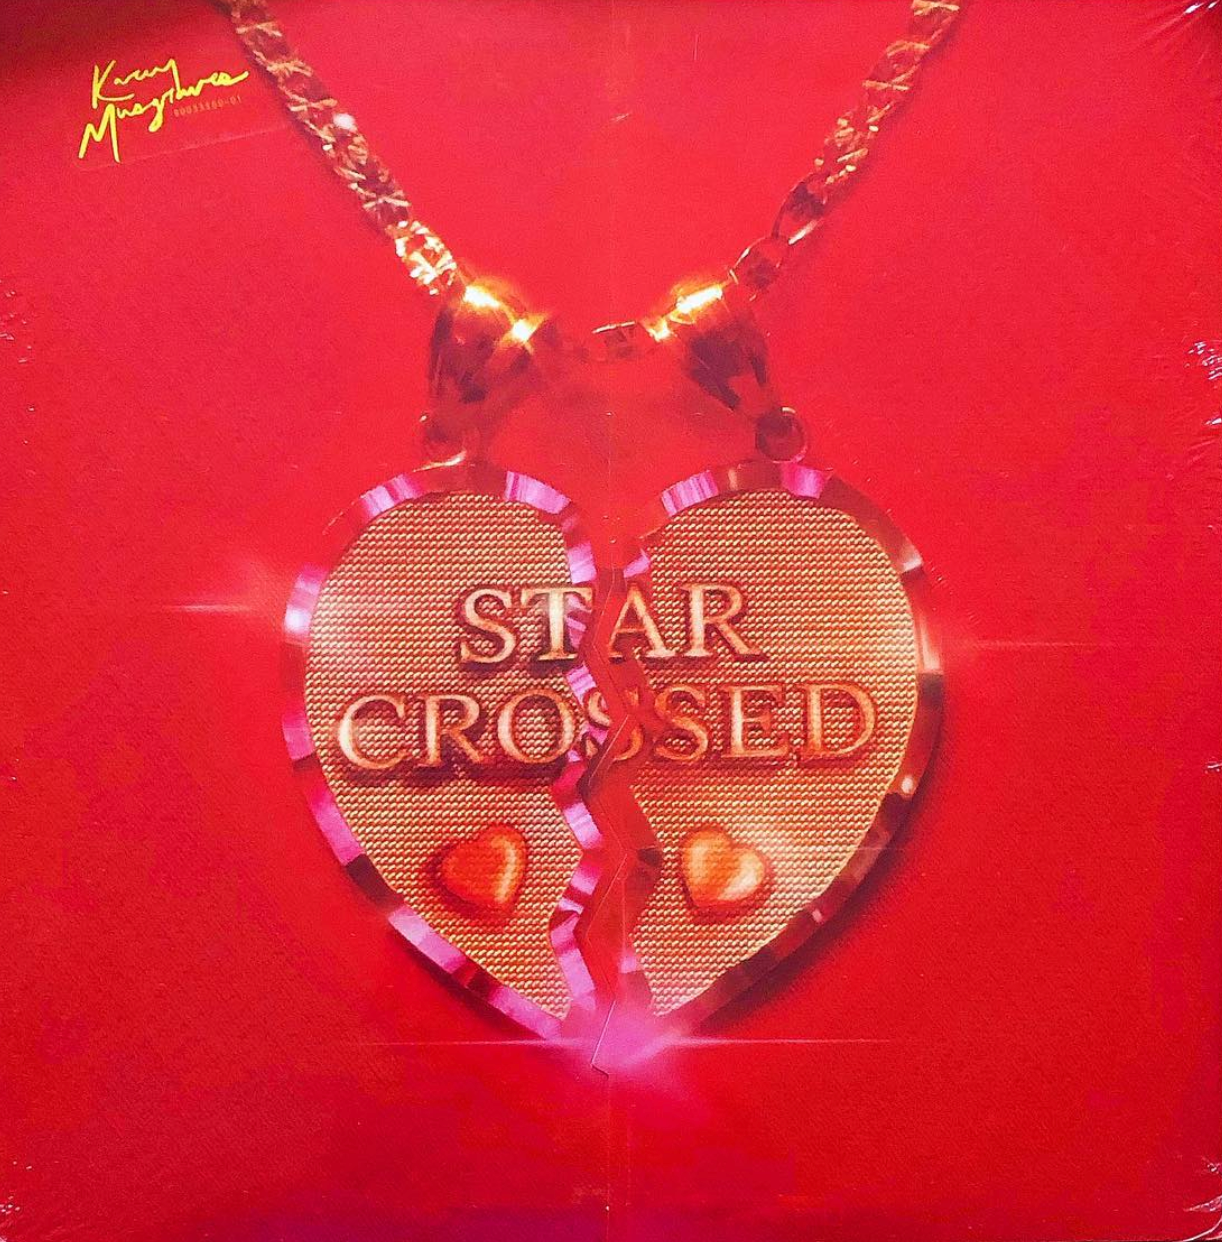 Star Crossed (Limited Edition Webstore Exclusive Violet/Clear Split Vinyl)